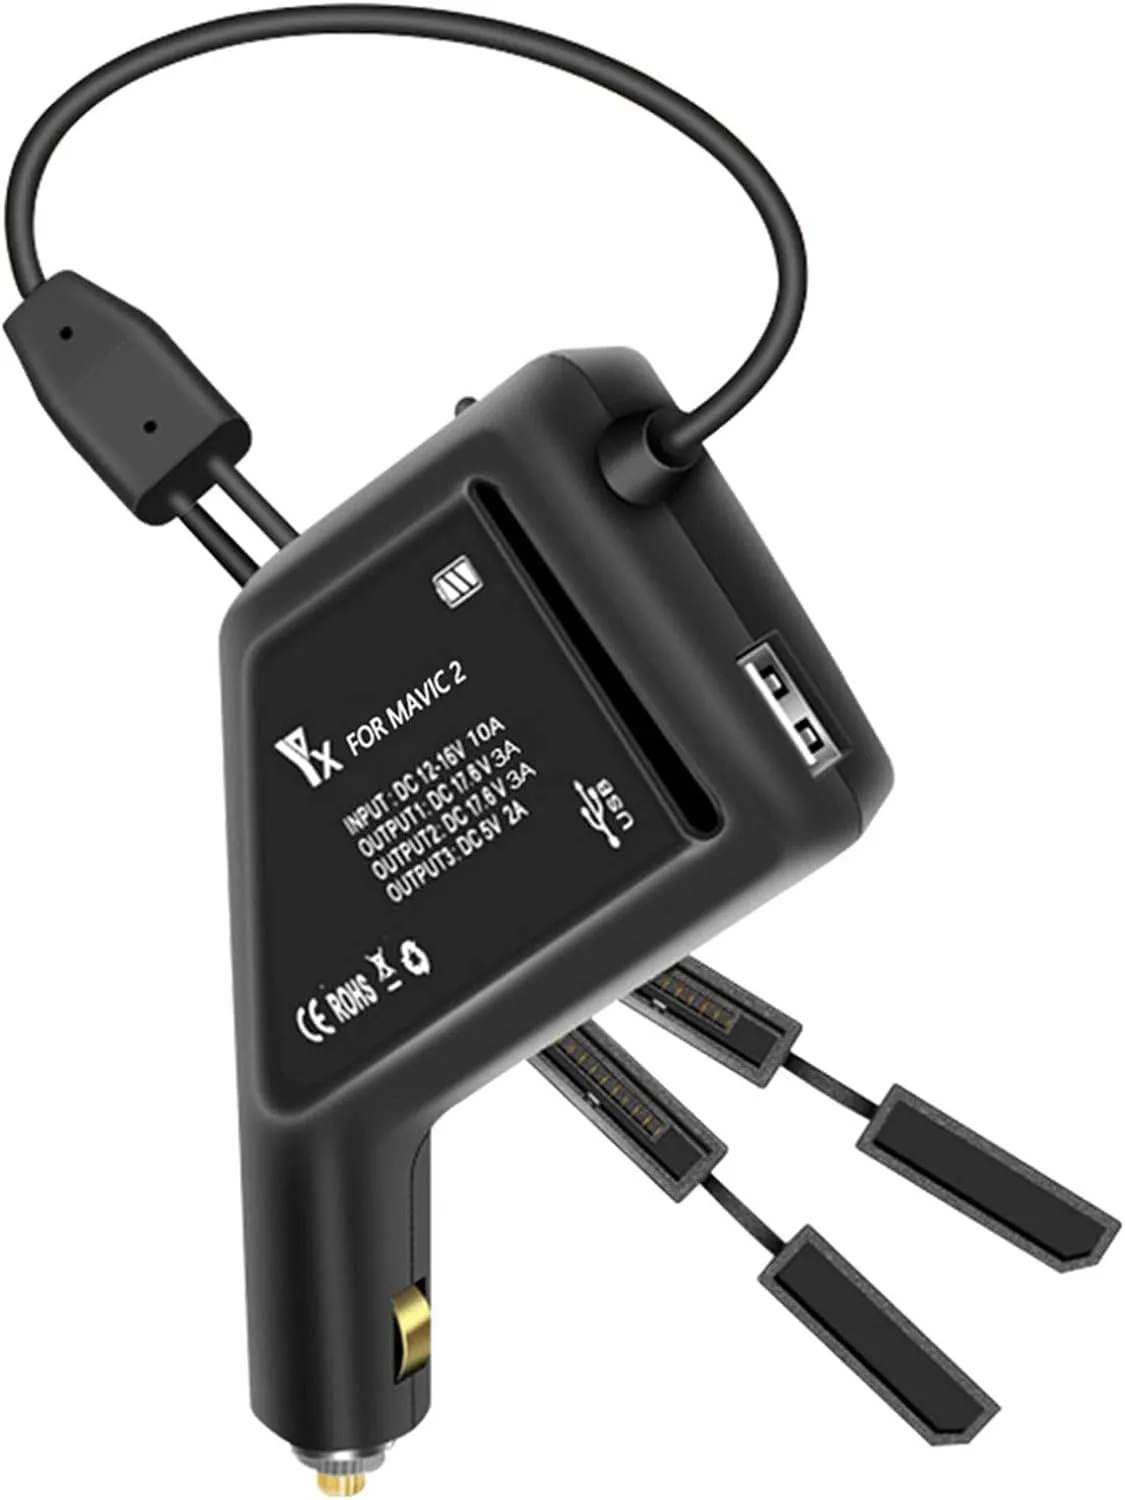 Yangers Kfz Ladegerät für DJI Mavic 2 Zoom / Pro, 3 in 1 Auto Ladegerät Adapter Für Zwei DJI Mavic 2 Akku + 1 Fernbedienung Controller (Schwarz)